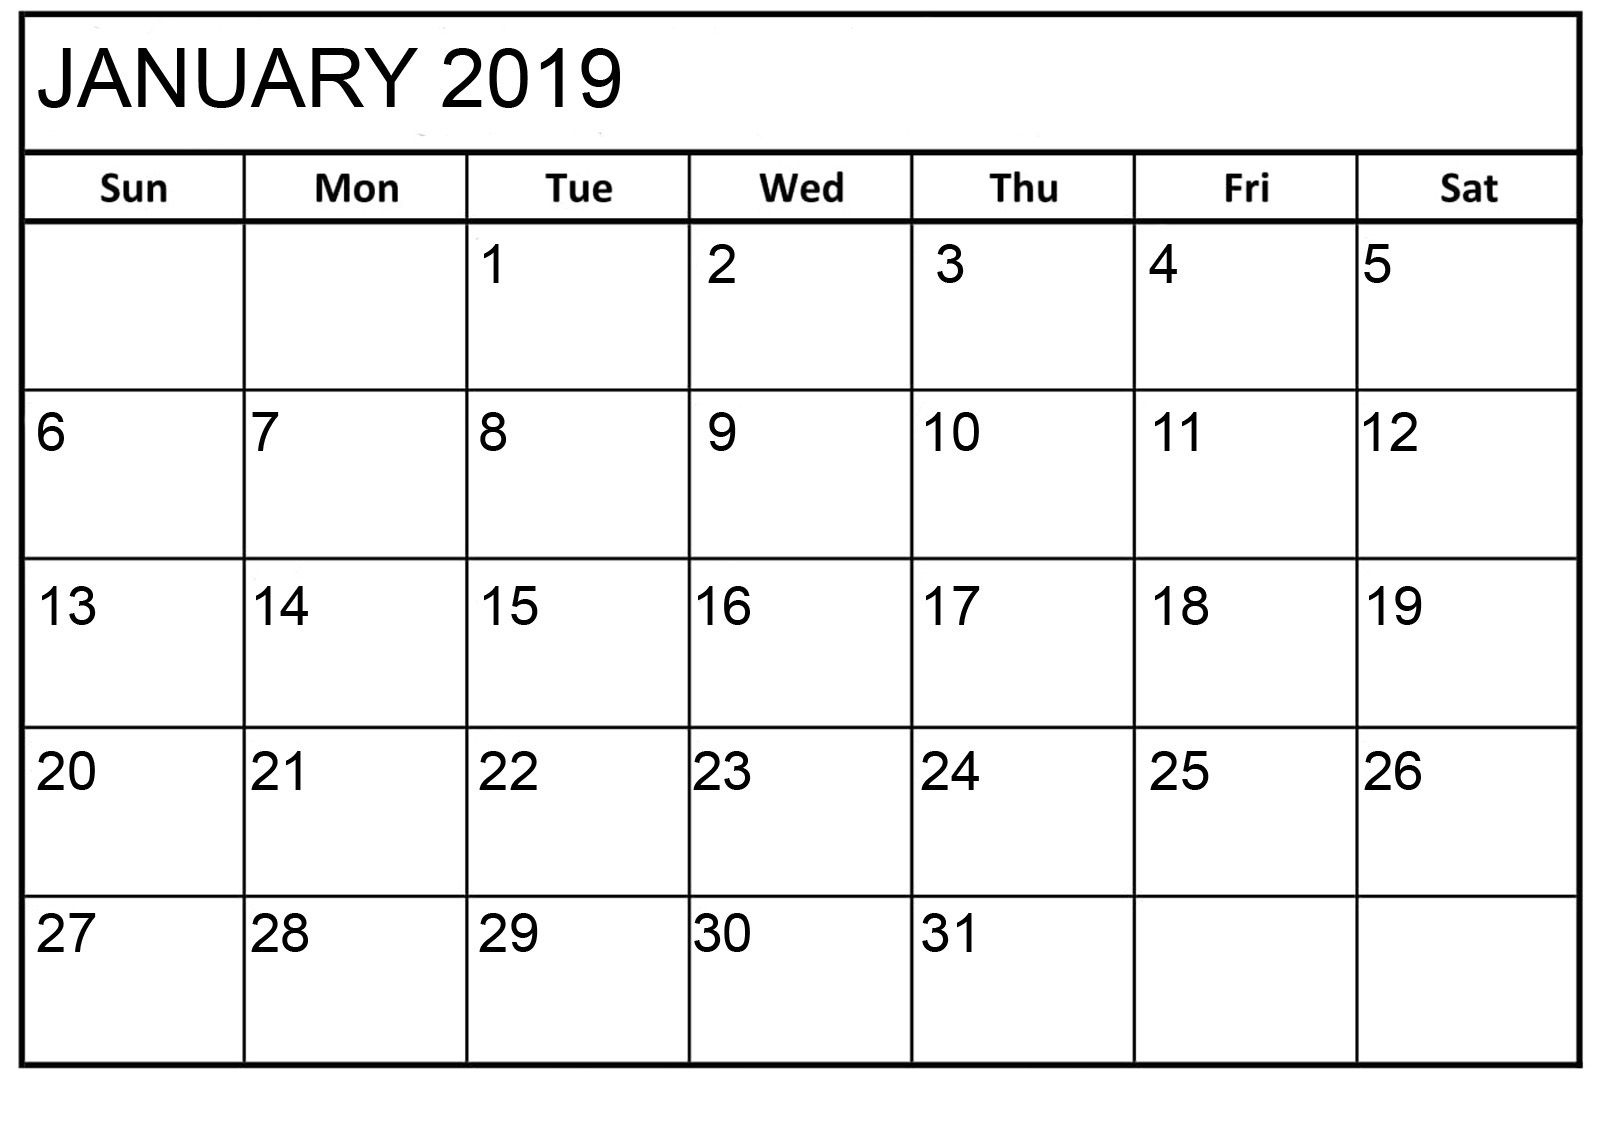 January 2019 Calendar Printable Html | Monthly Calendar Free Calendar Html Template